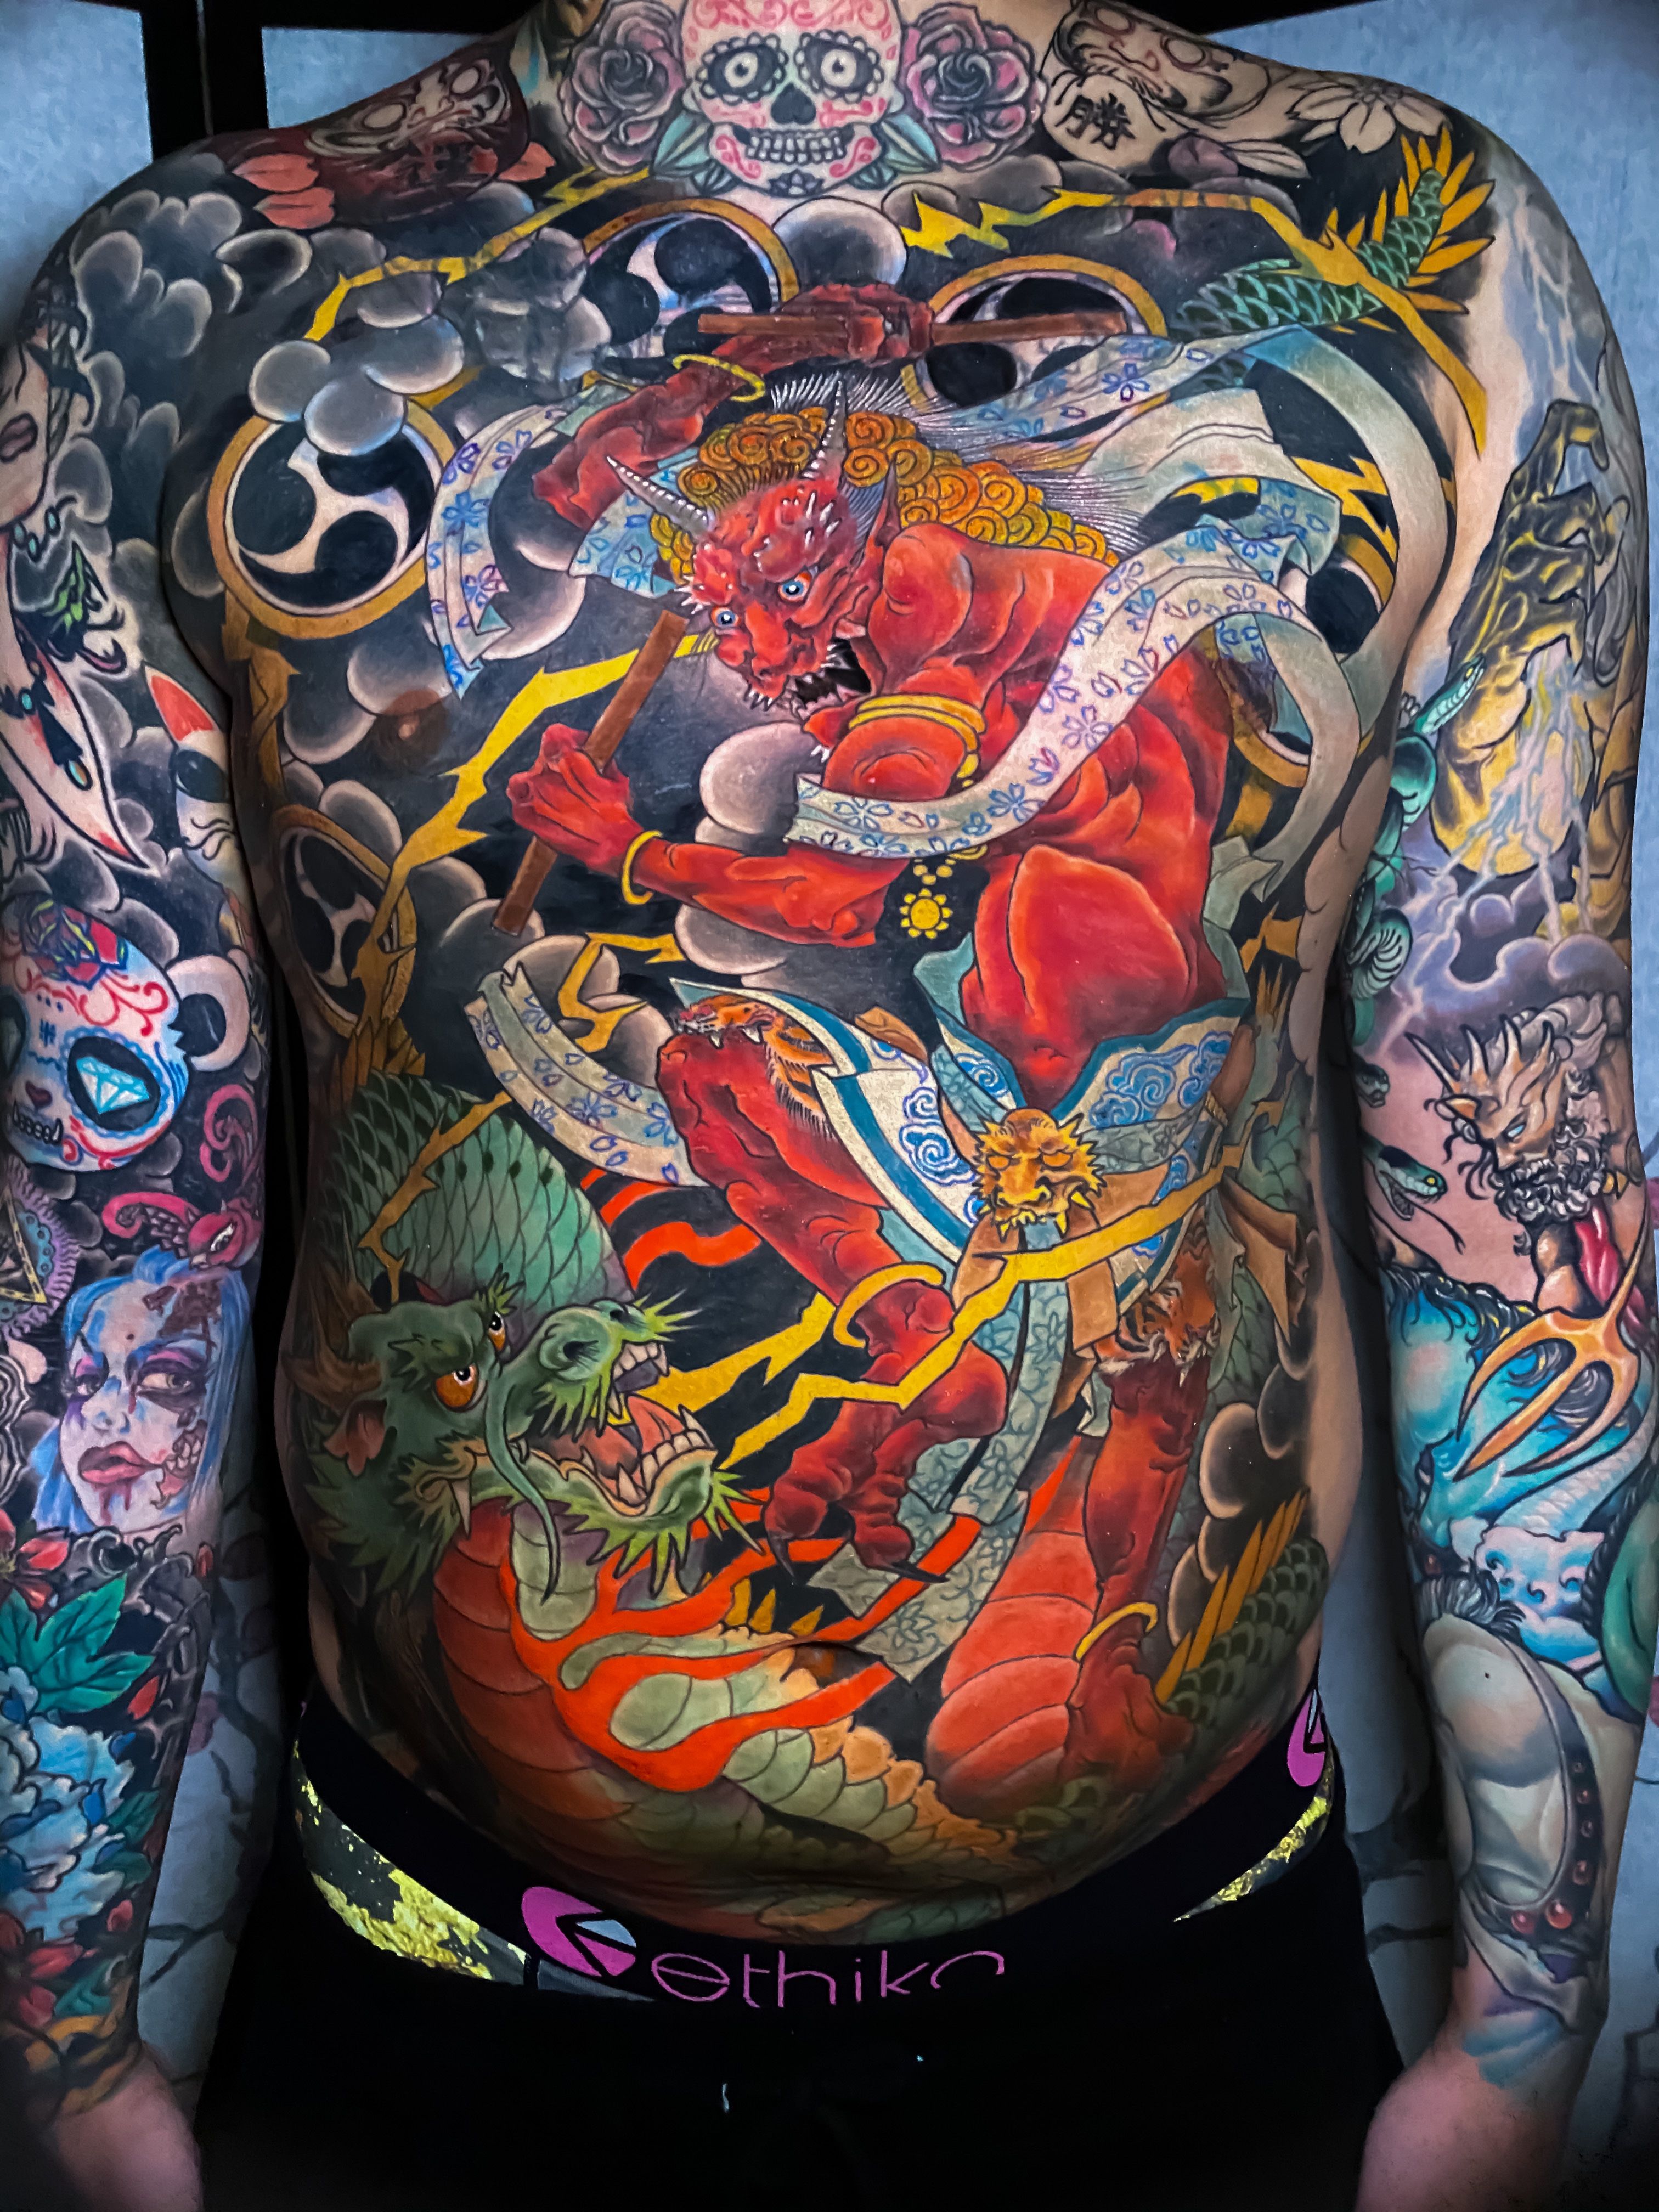 Raijin-thunder god for @george_chronicink_ • • • • • #tattoo #tatt#tatts#tattoolife#ink#inked#inkedskin#bodyart#art#artwork#asianart#asianstyle#asianstyletattoo#…